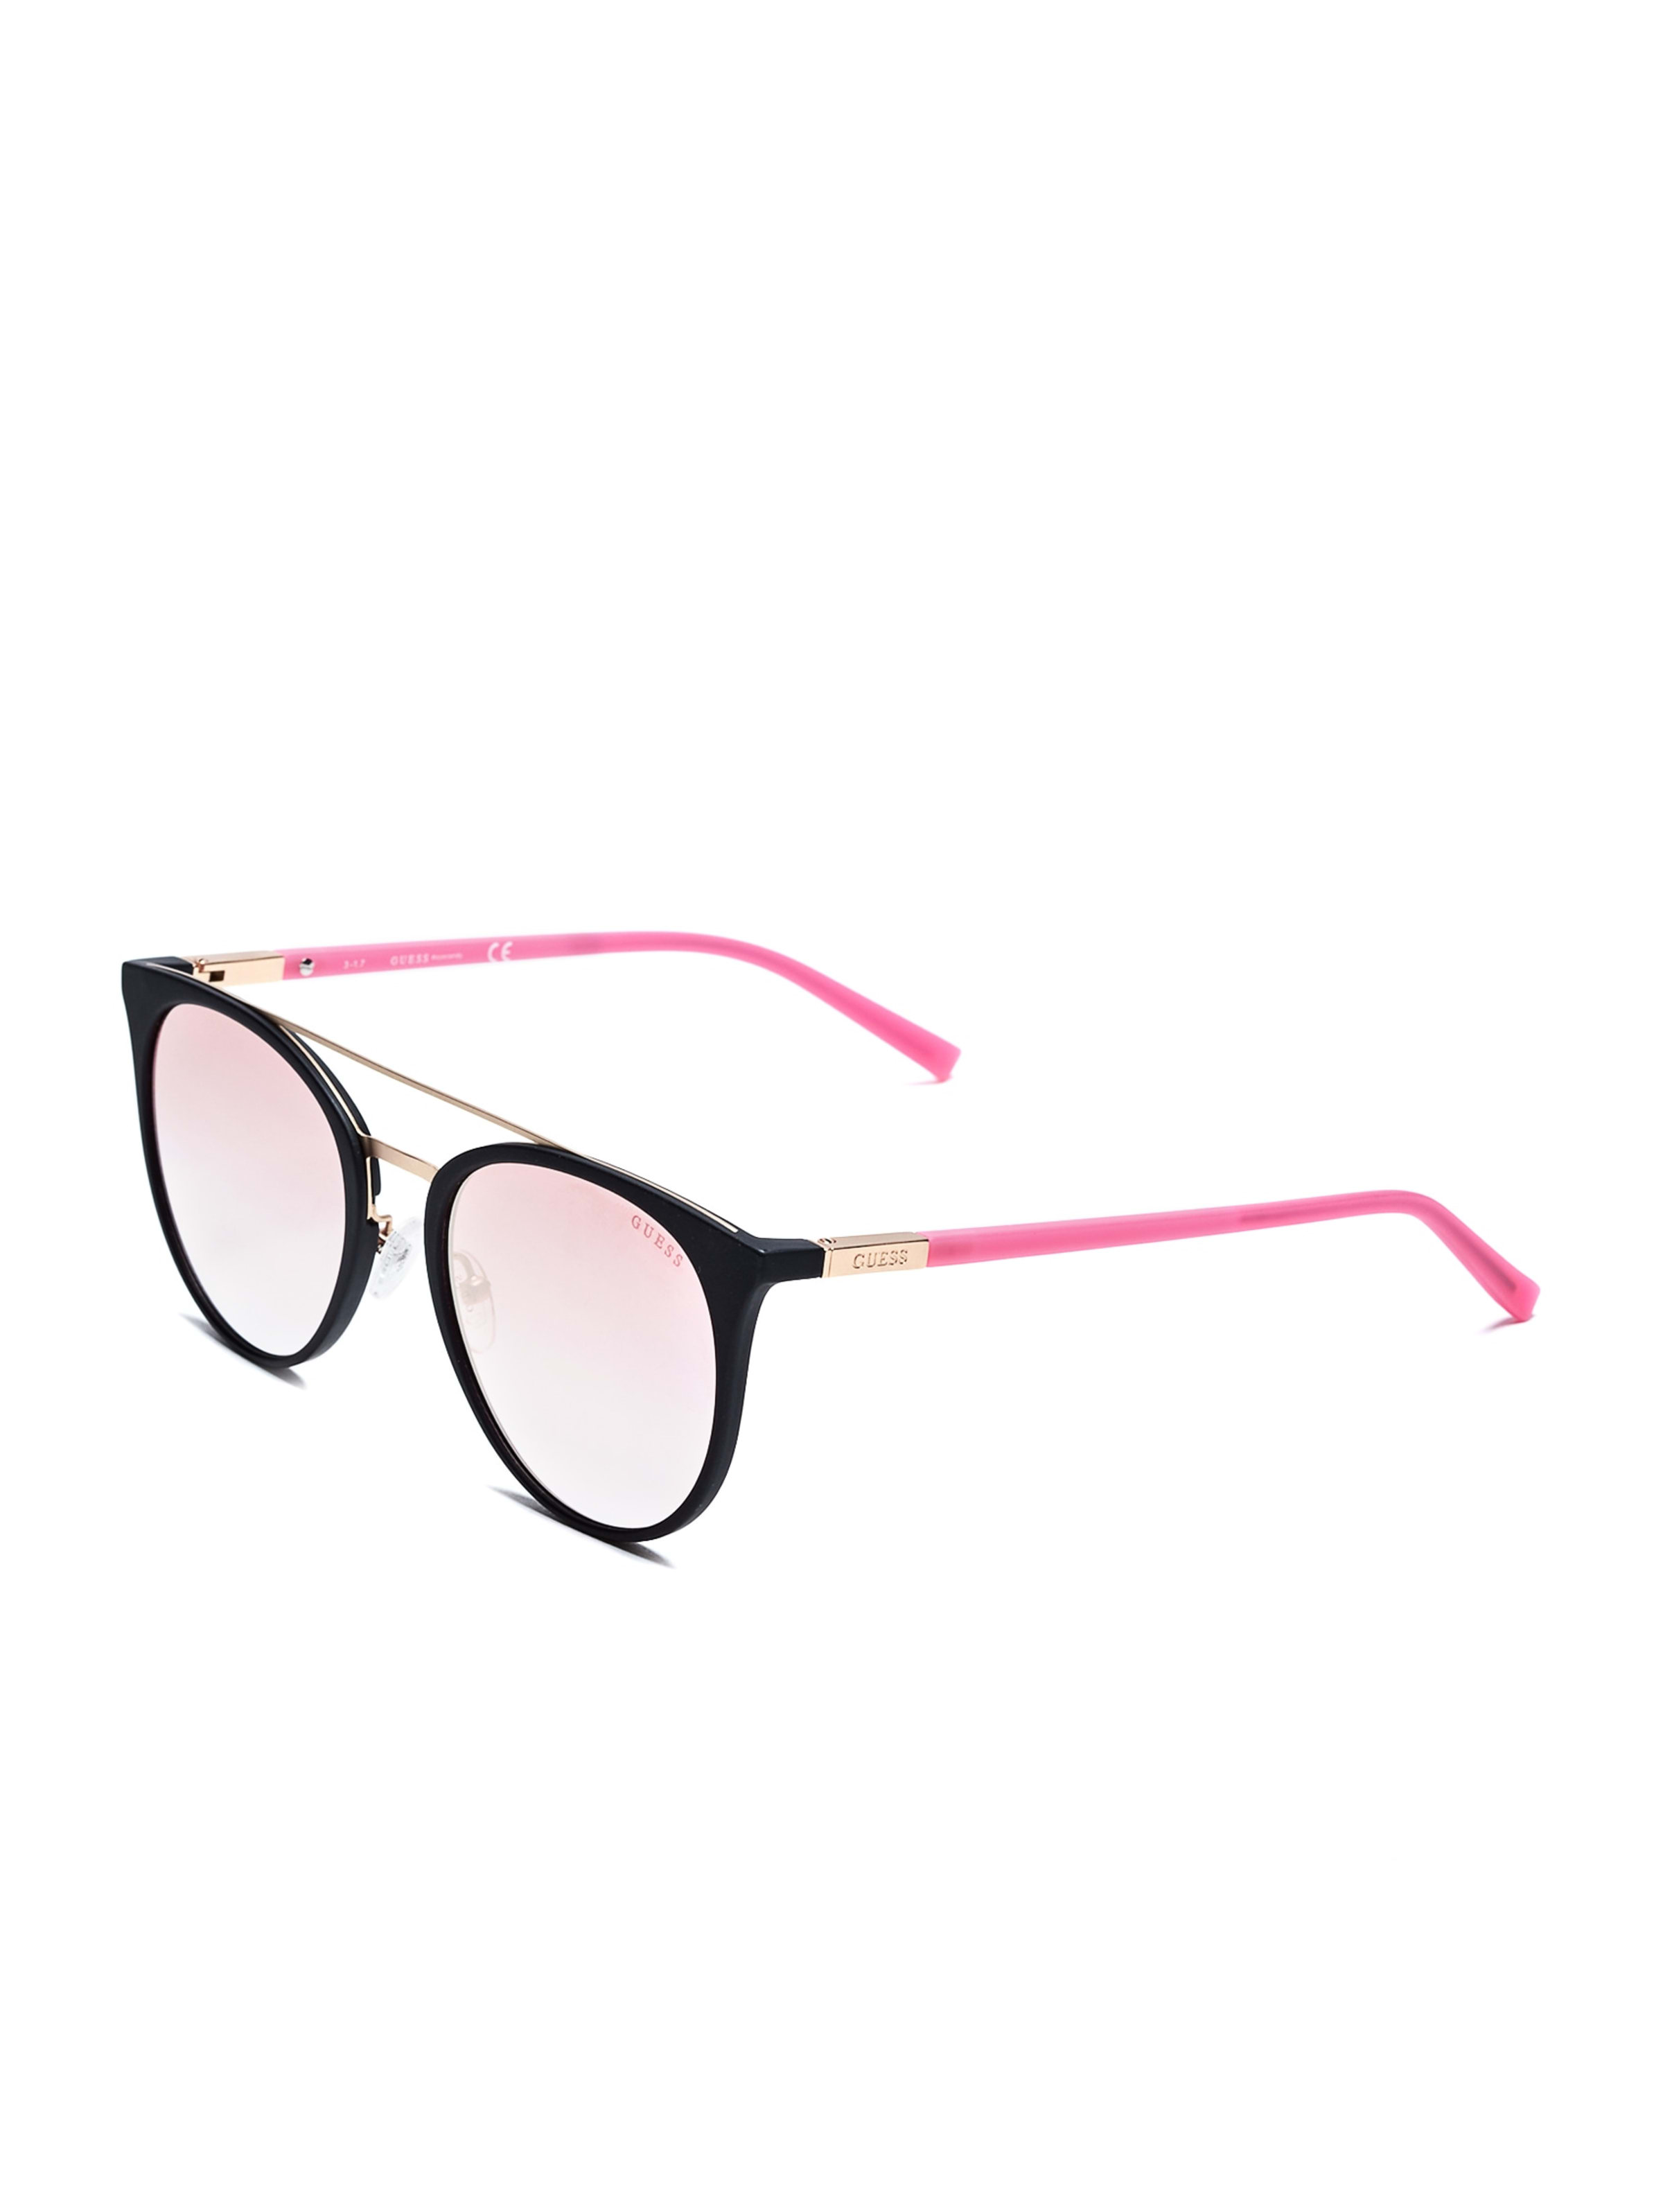 Eye Candy Round Top-Bar Sunglasses | GUESS.com